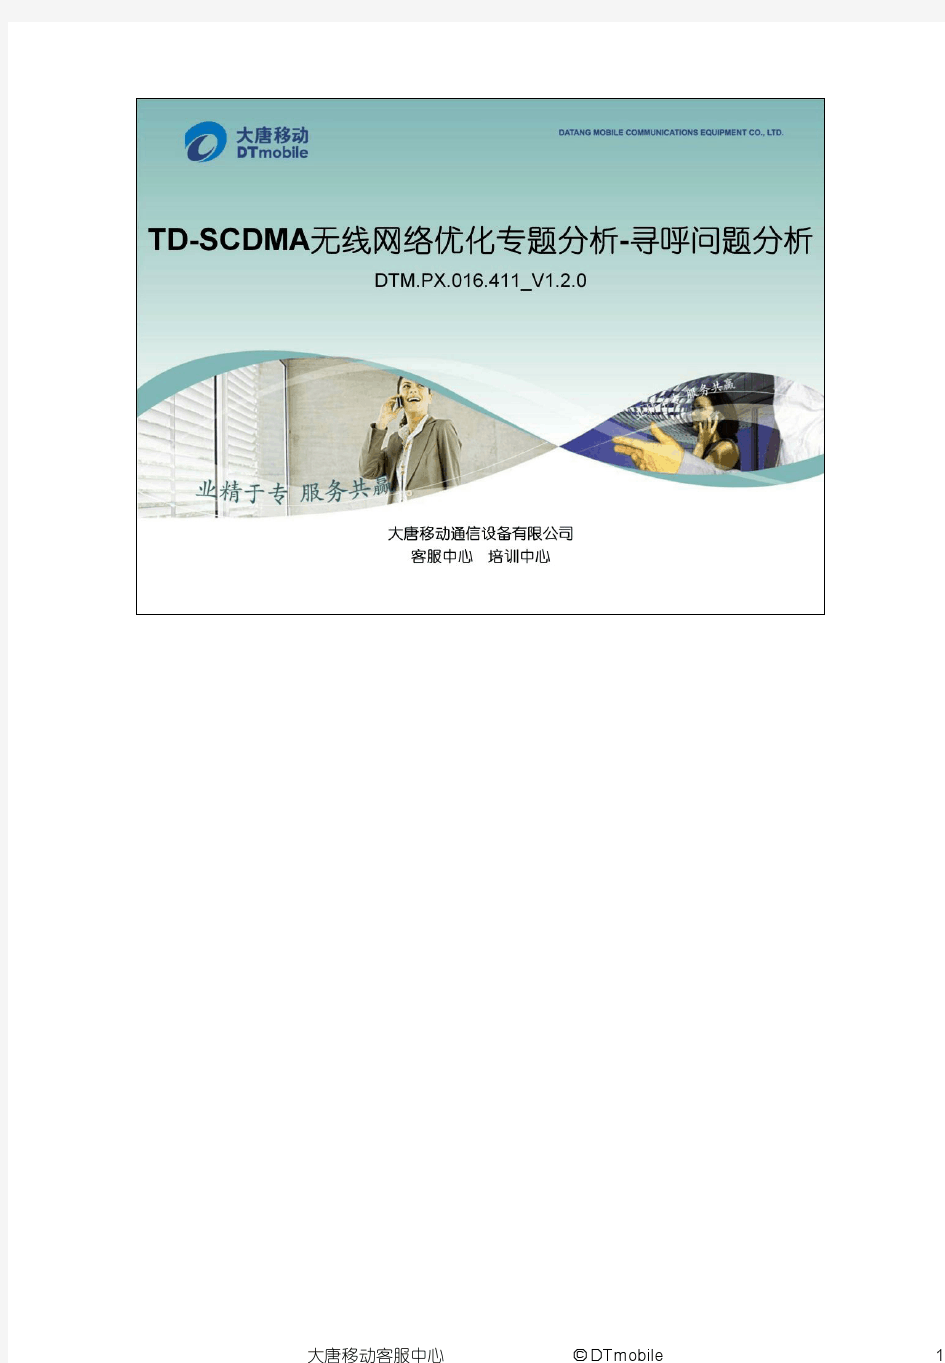 TD-SCDMA无线网络优化专题分析-寻呼问题分析1.2.0_加水印